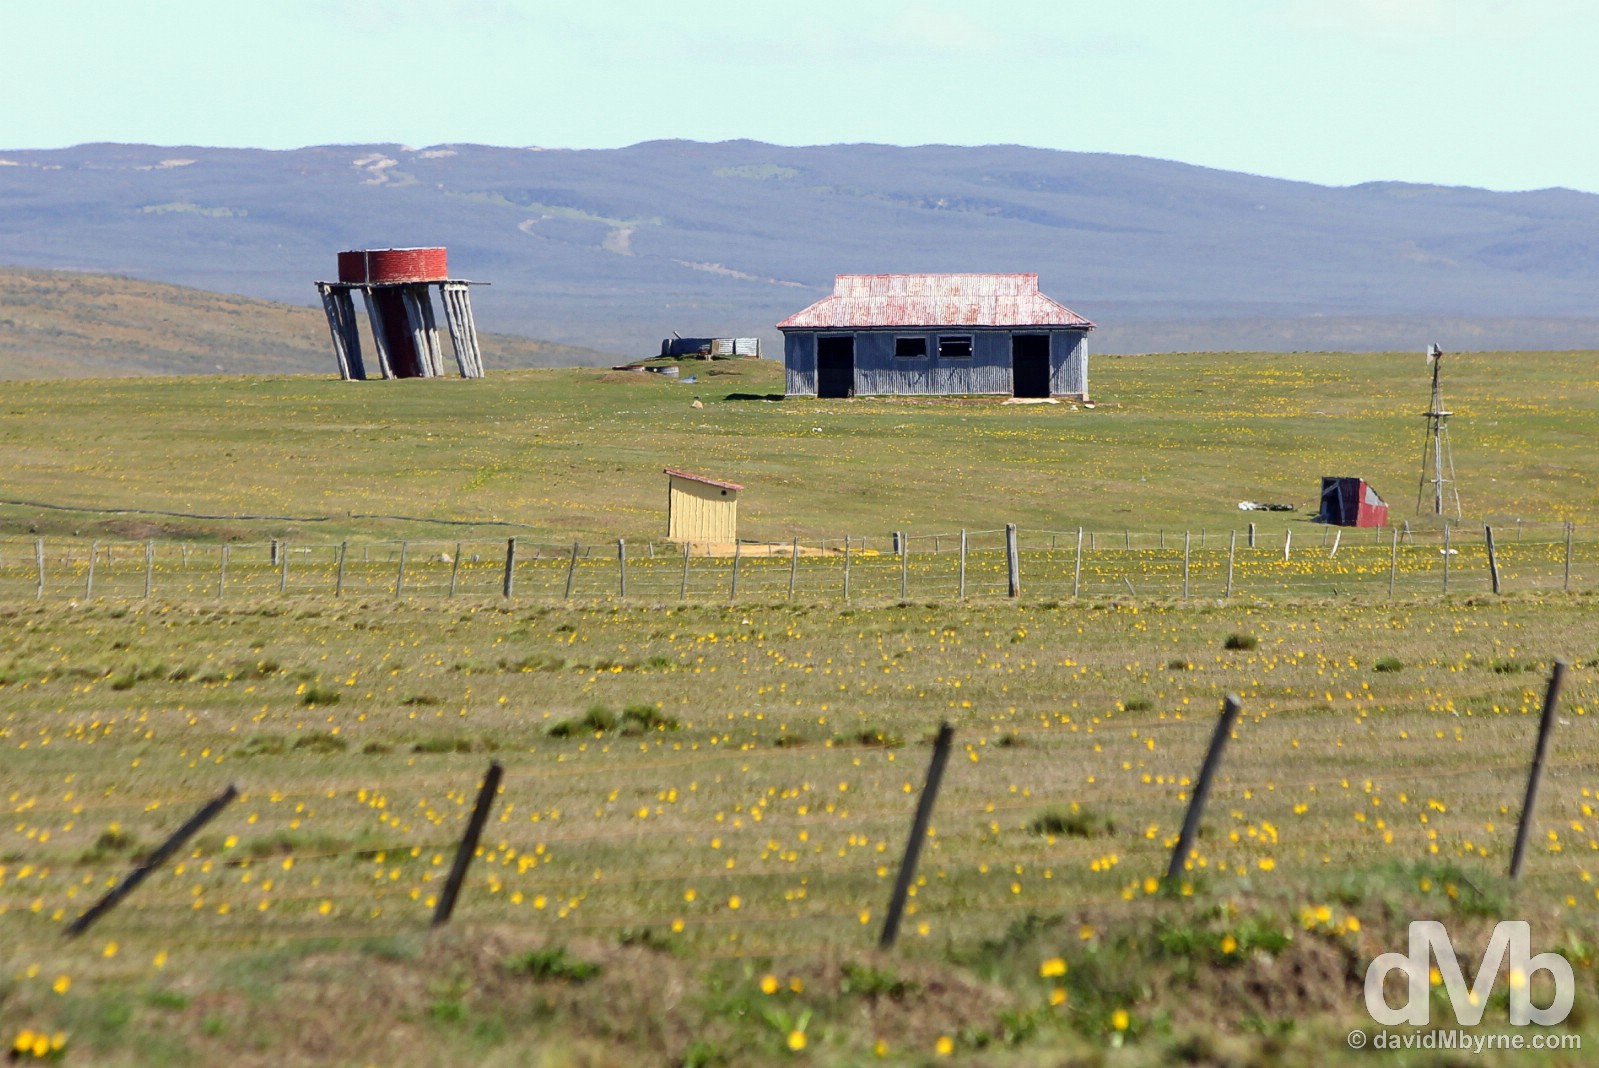 Windswept farmland near the San Sebastian border crossing with Chile & Argentina, Tierra del Fuego, Chile. November 11, 2015.